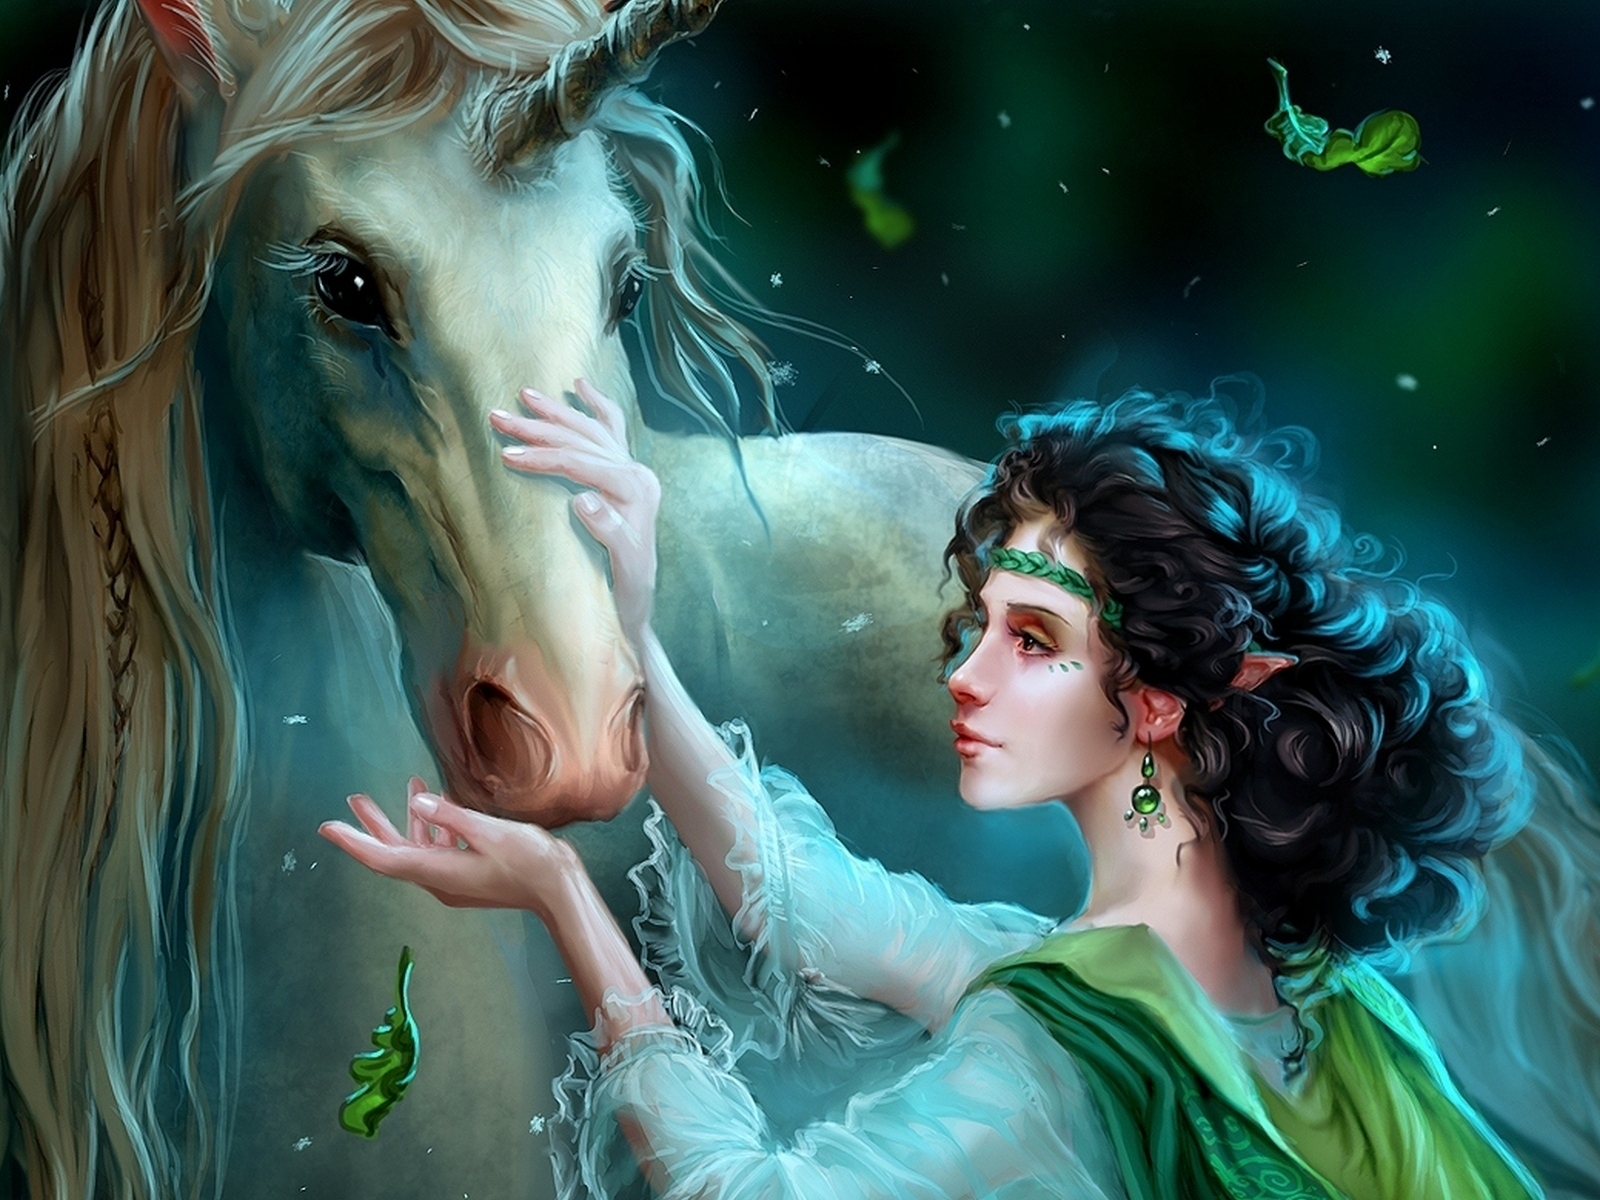 Fairytale Wild Dreamer for 1600 x 1200 resolution